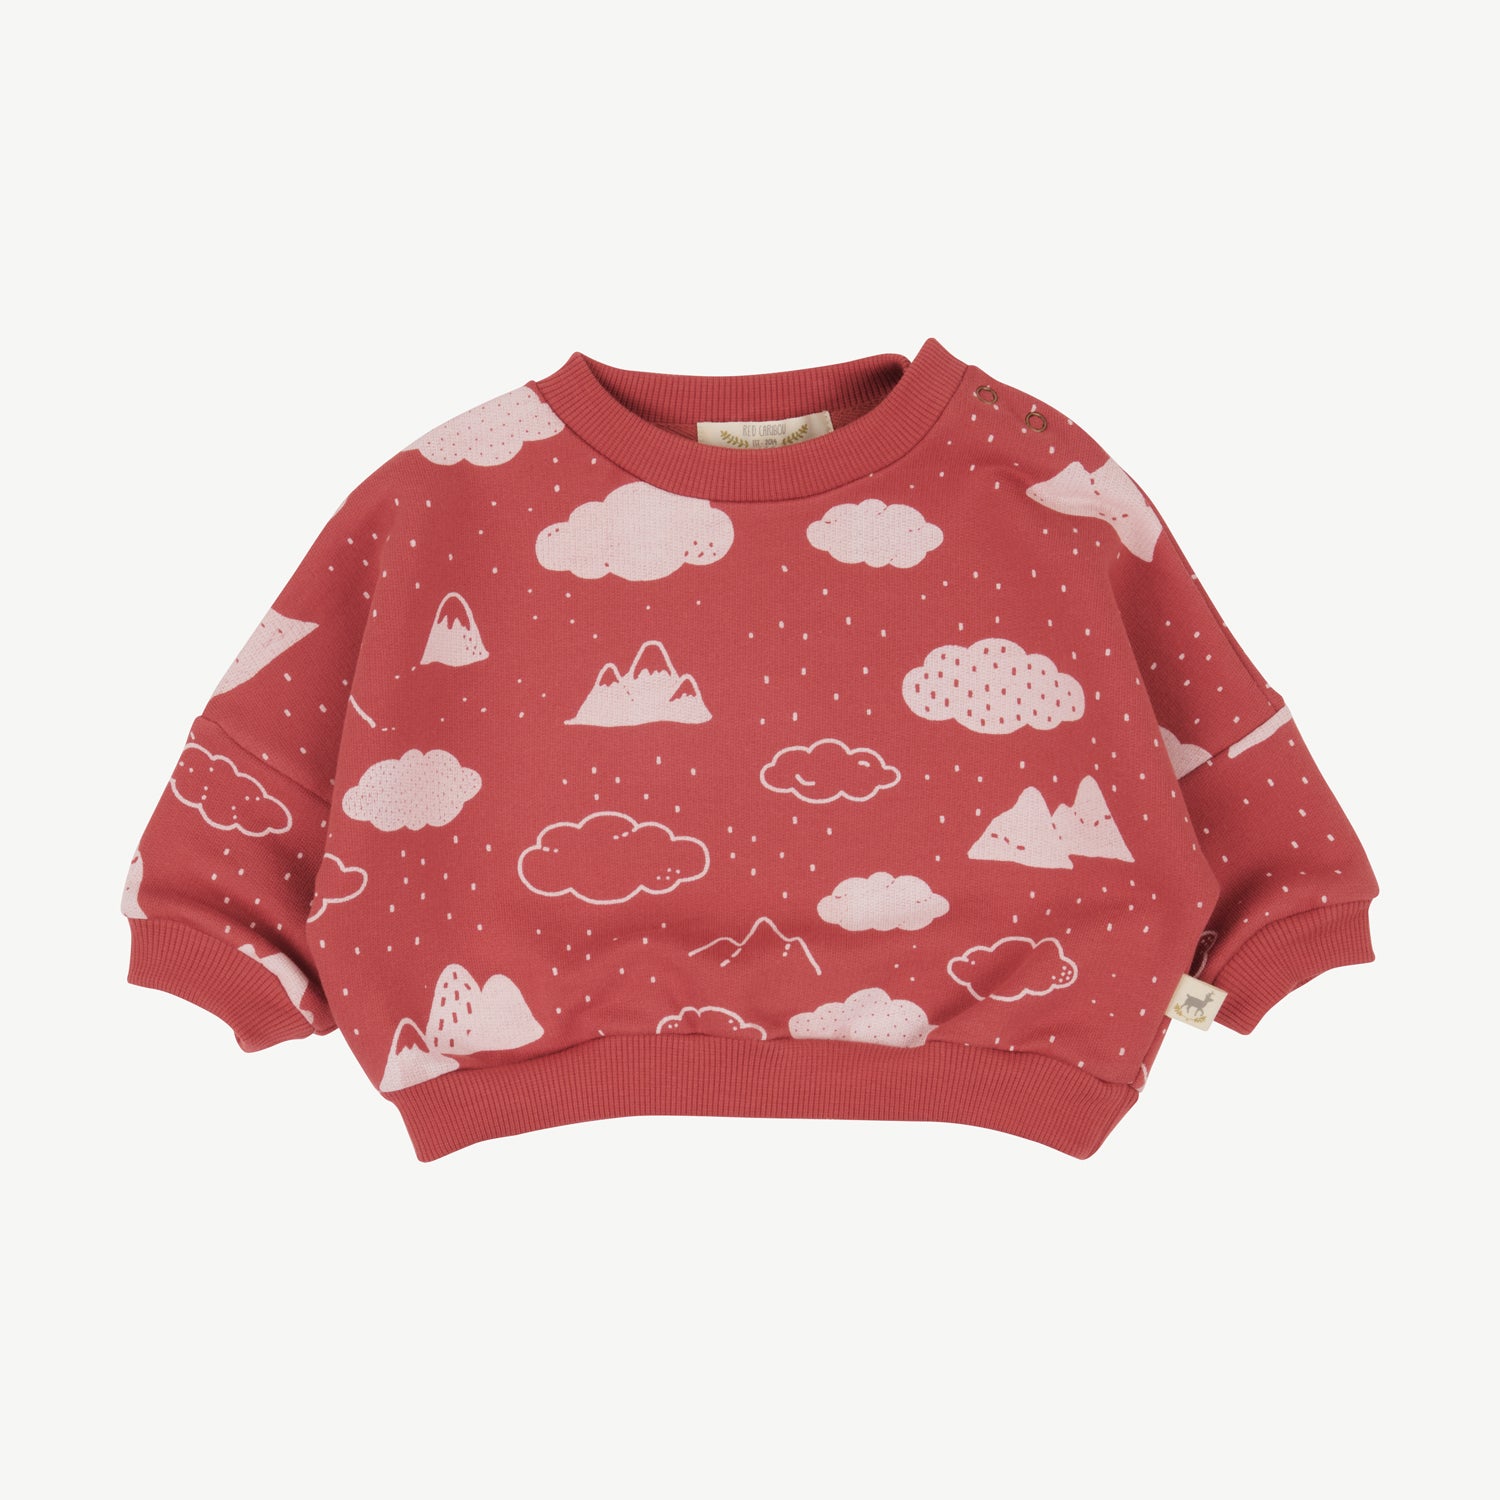 'amongst the clouds' tandoori spice sweatshirt